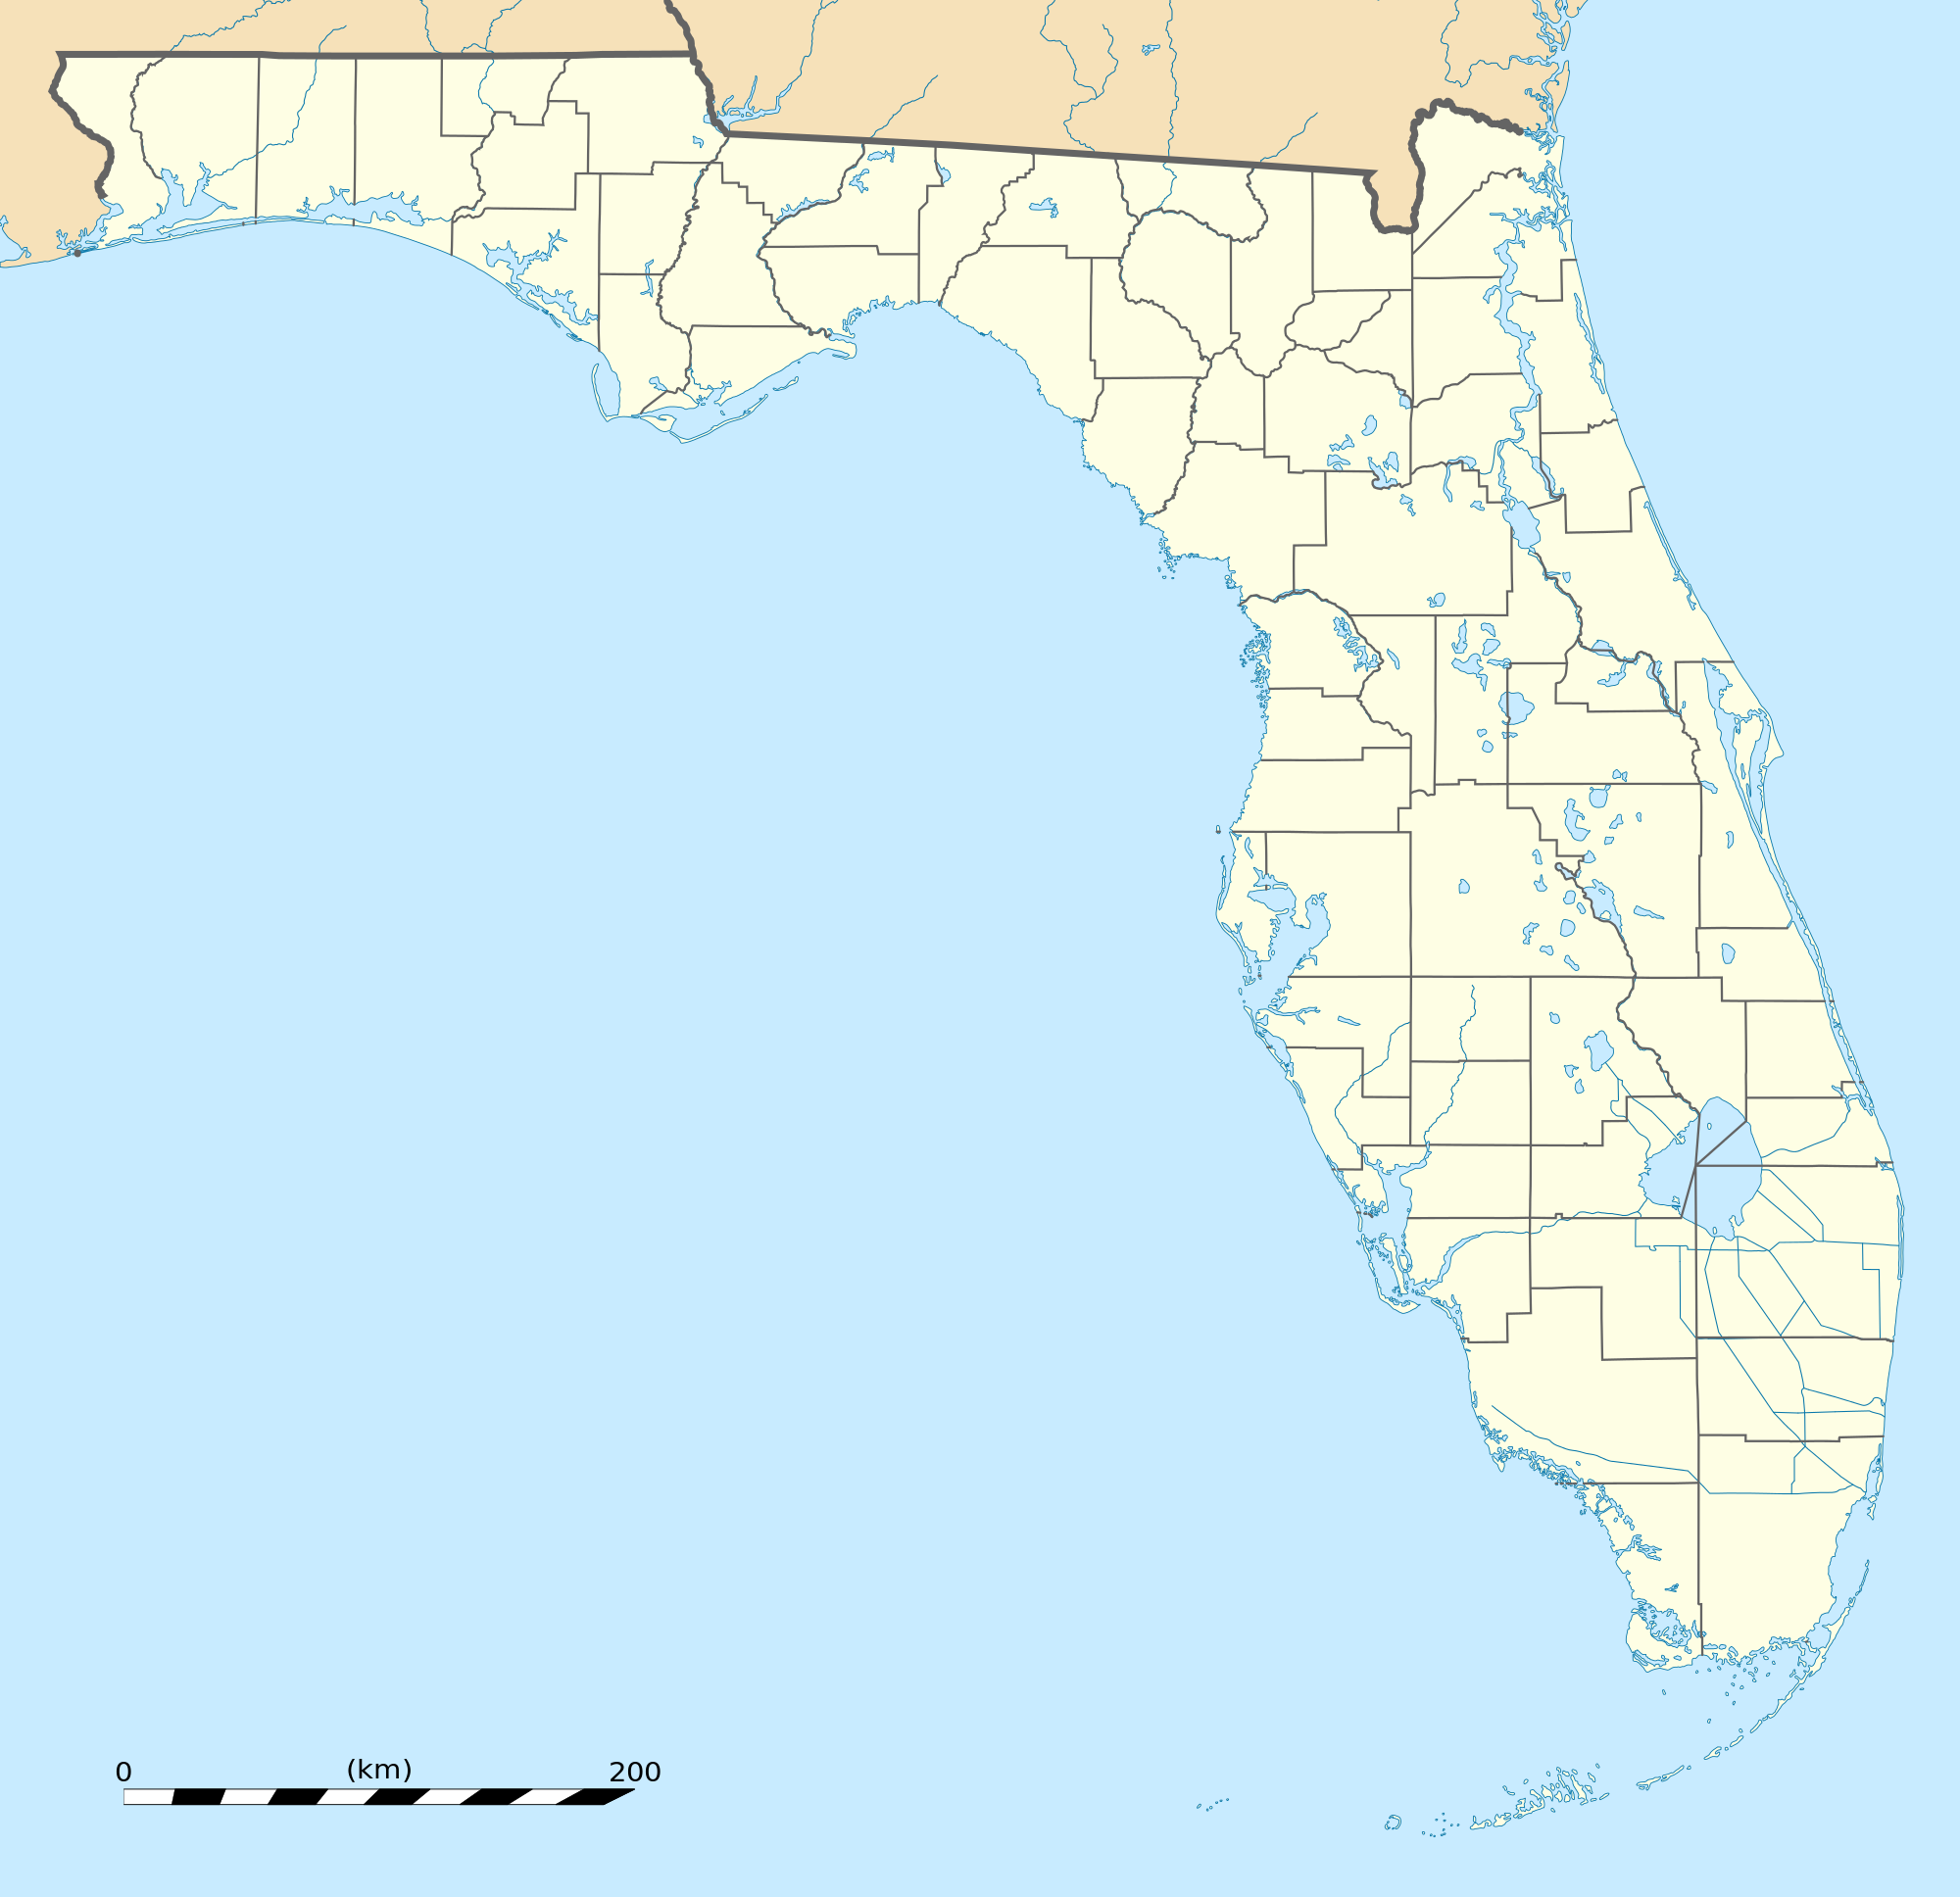 Florida - Dr. Odd